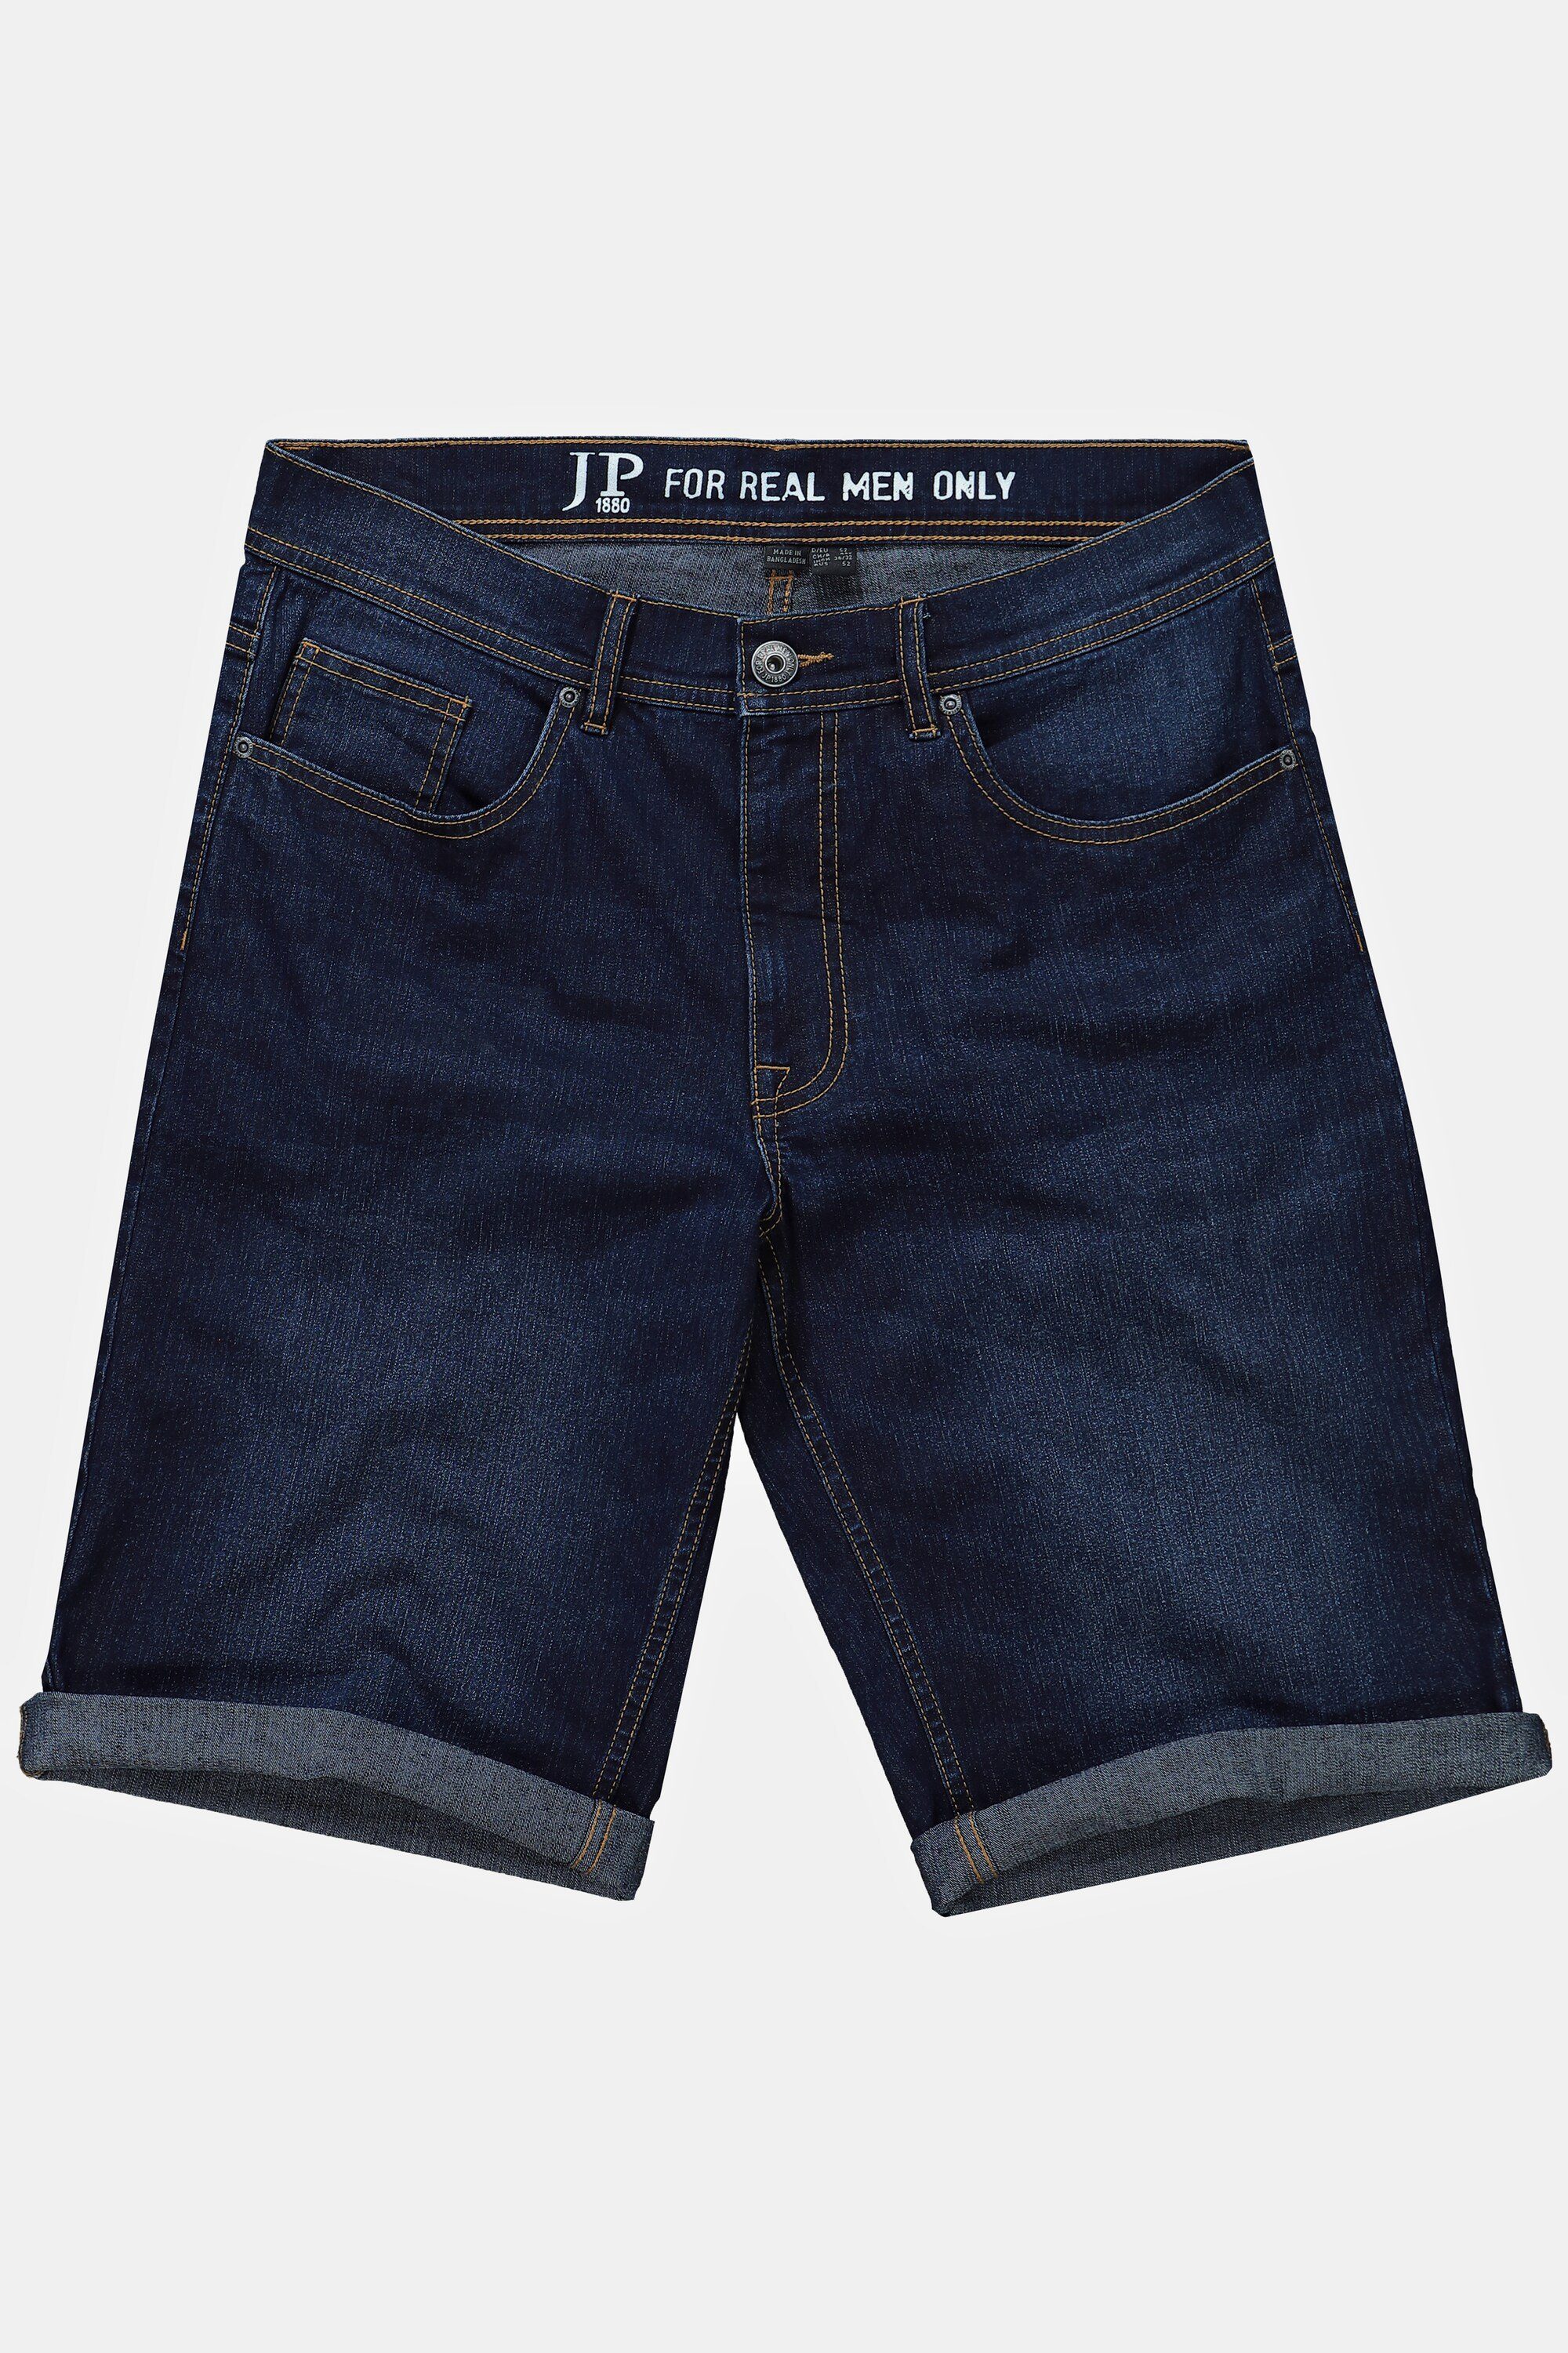 Regular Bermuda Stretch Jeansbermudas blue Fit Denim 5-Pocket dark JP1880 denim